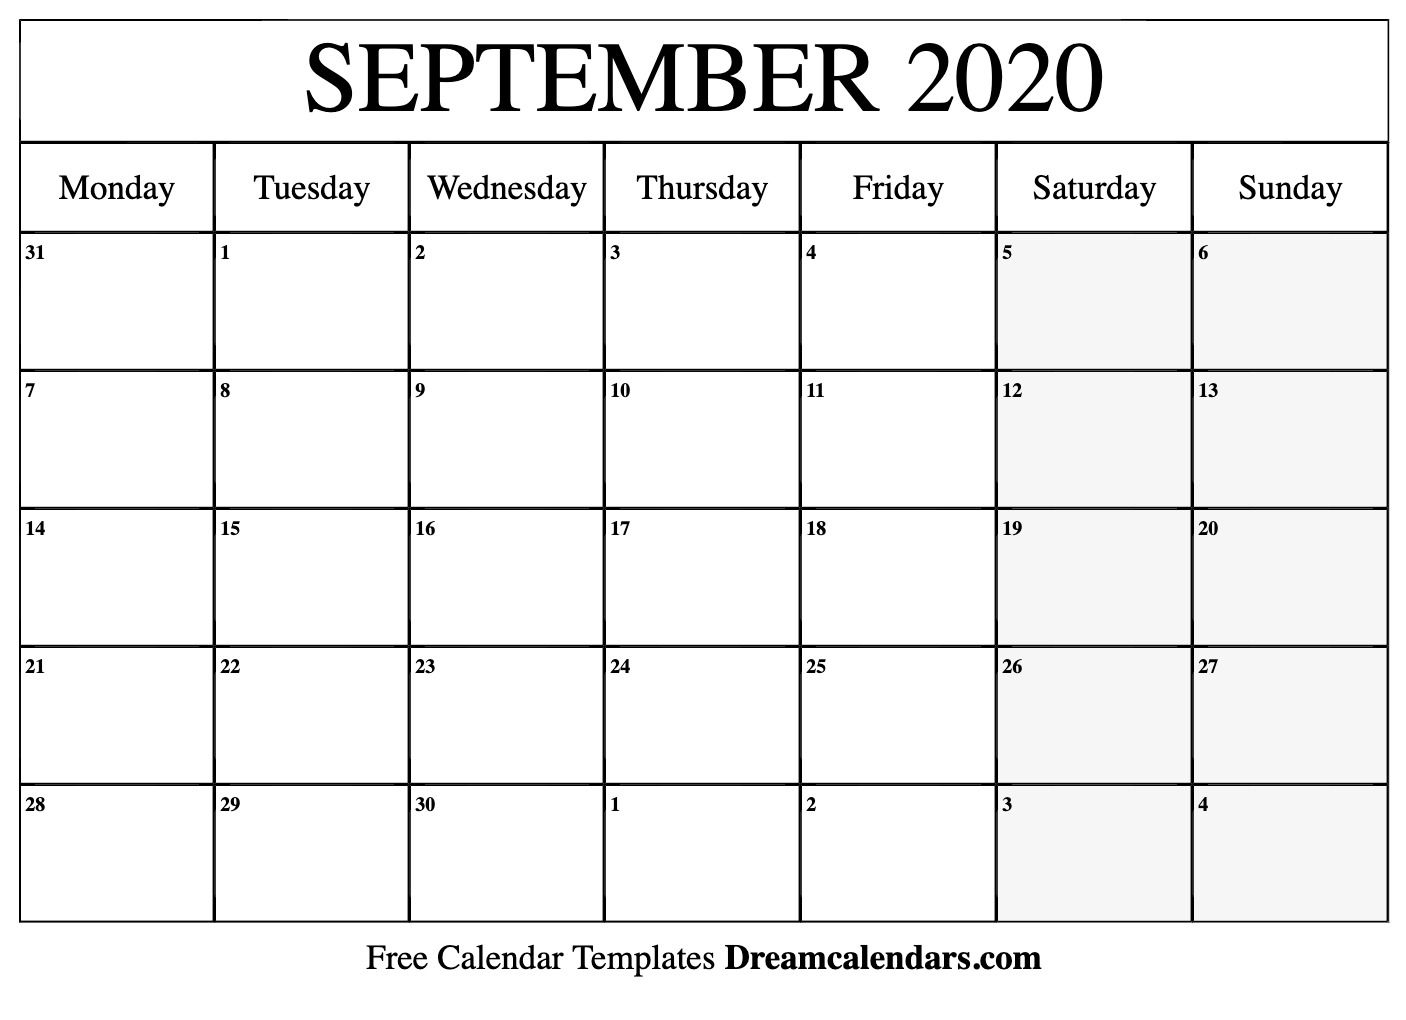 September Calendar Wallpapers Top Free September